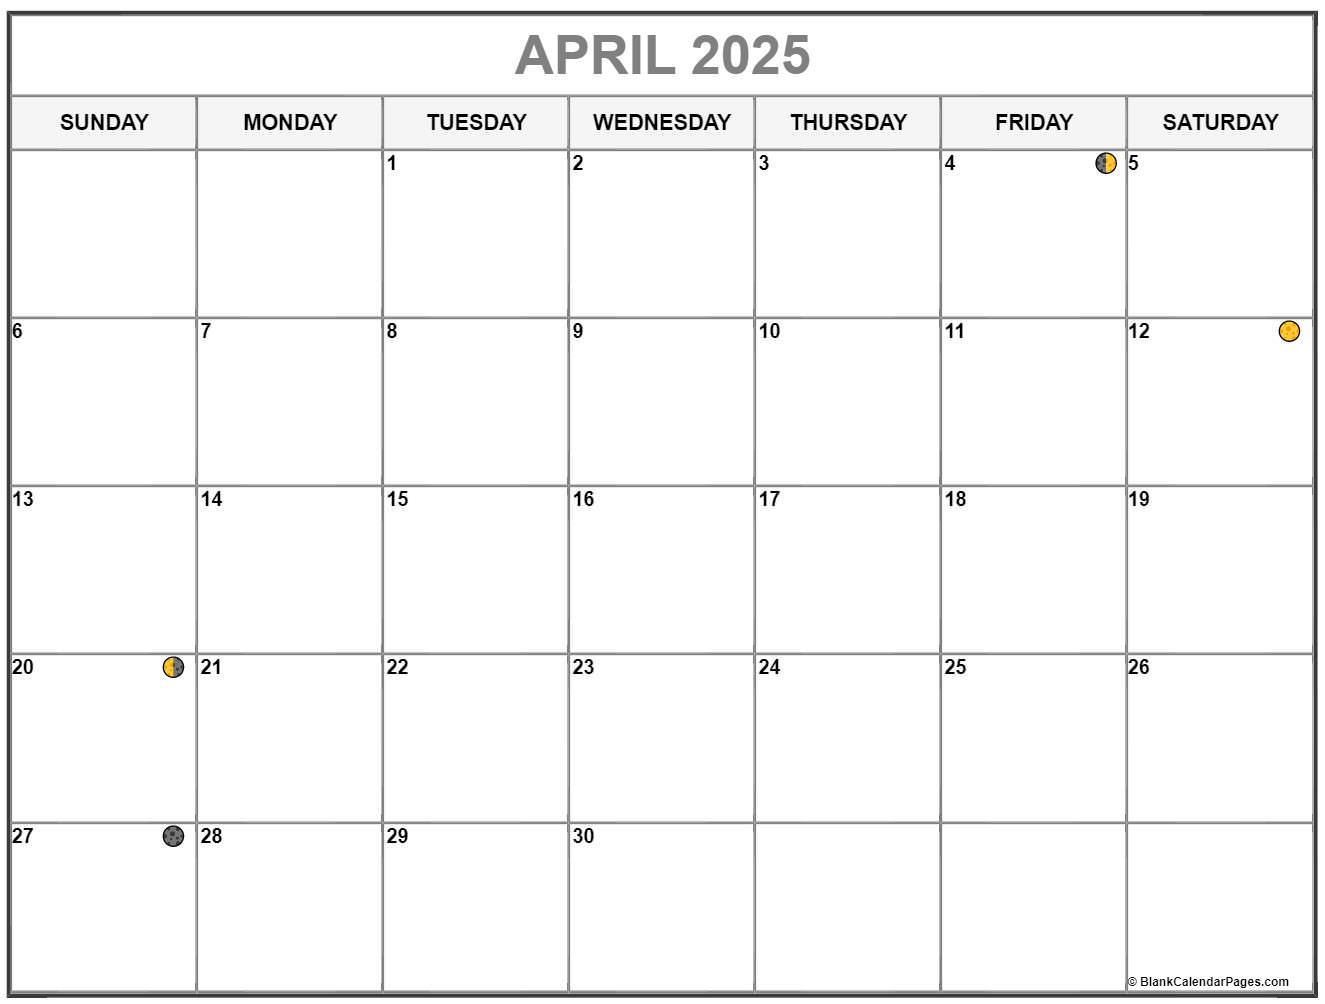 April 2025 Lunar Calendar Moon Phase Calendar